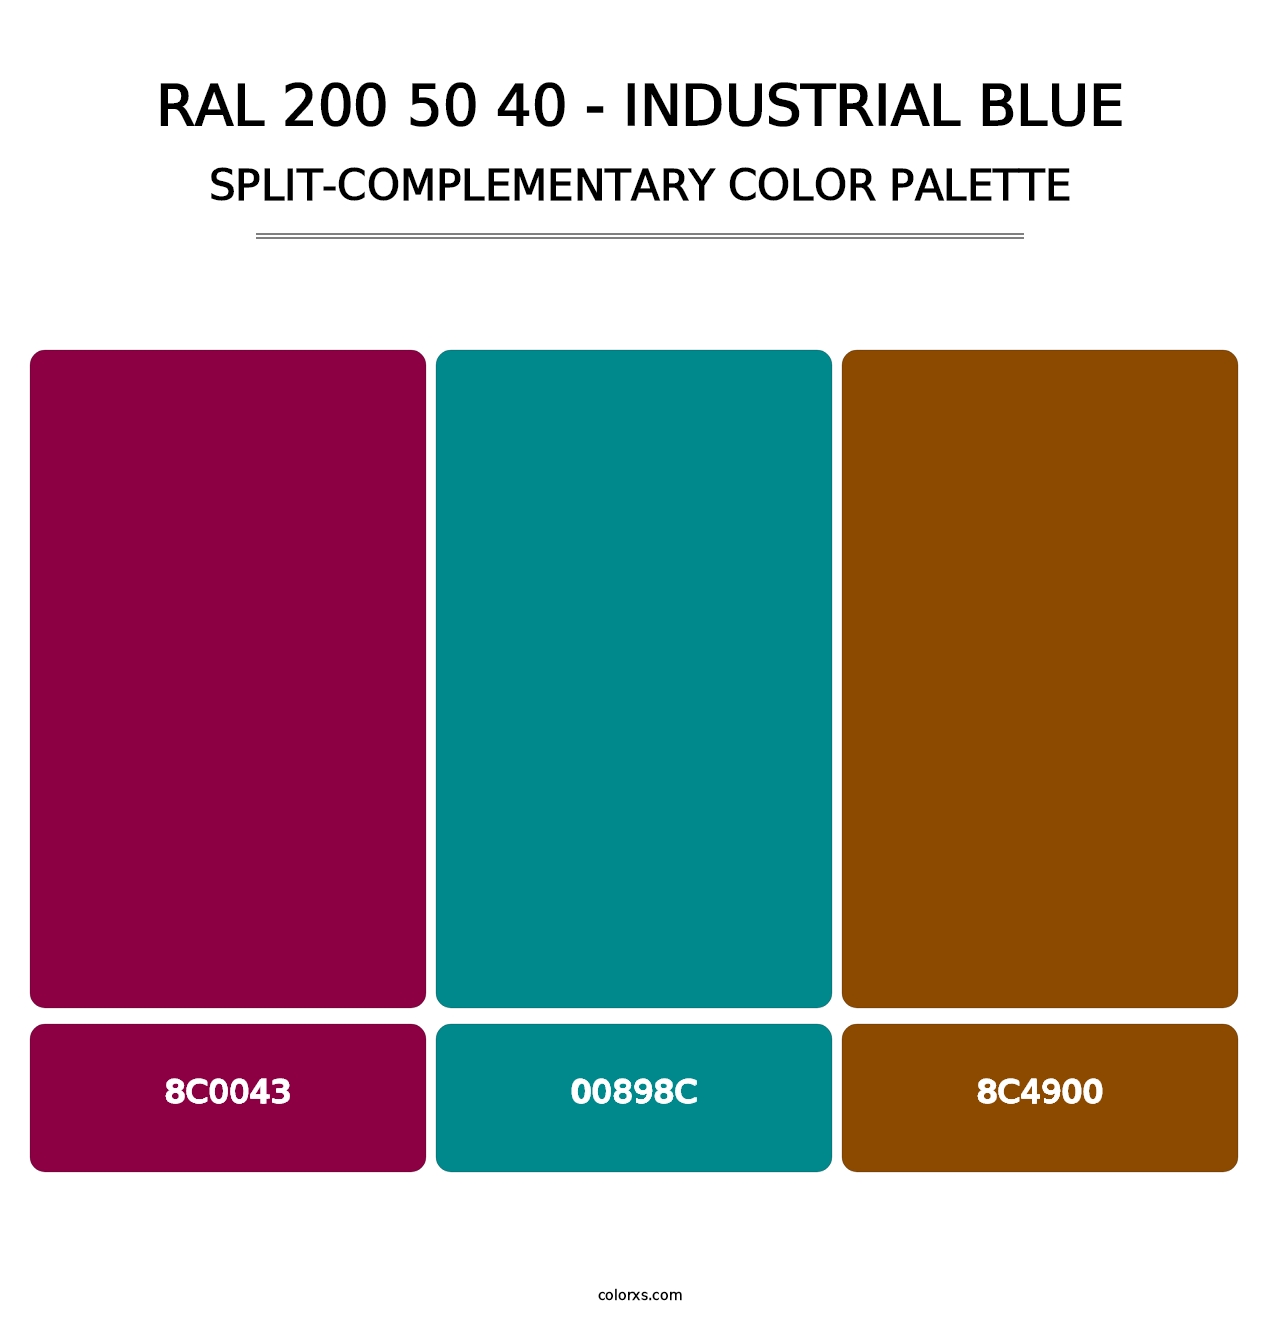 RAL 200 50 40 - Industrial Blue - Split-Complementary Color Palette